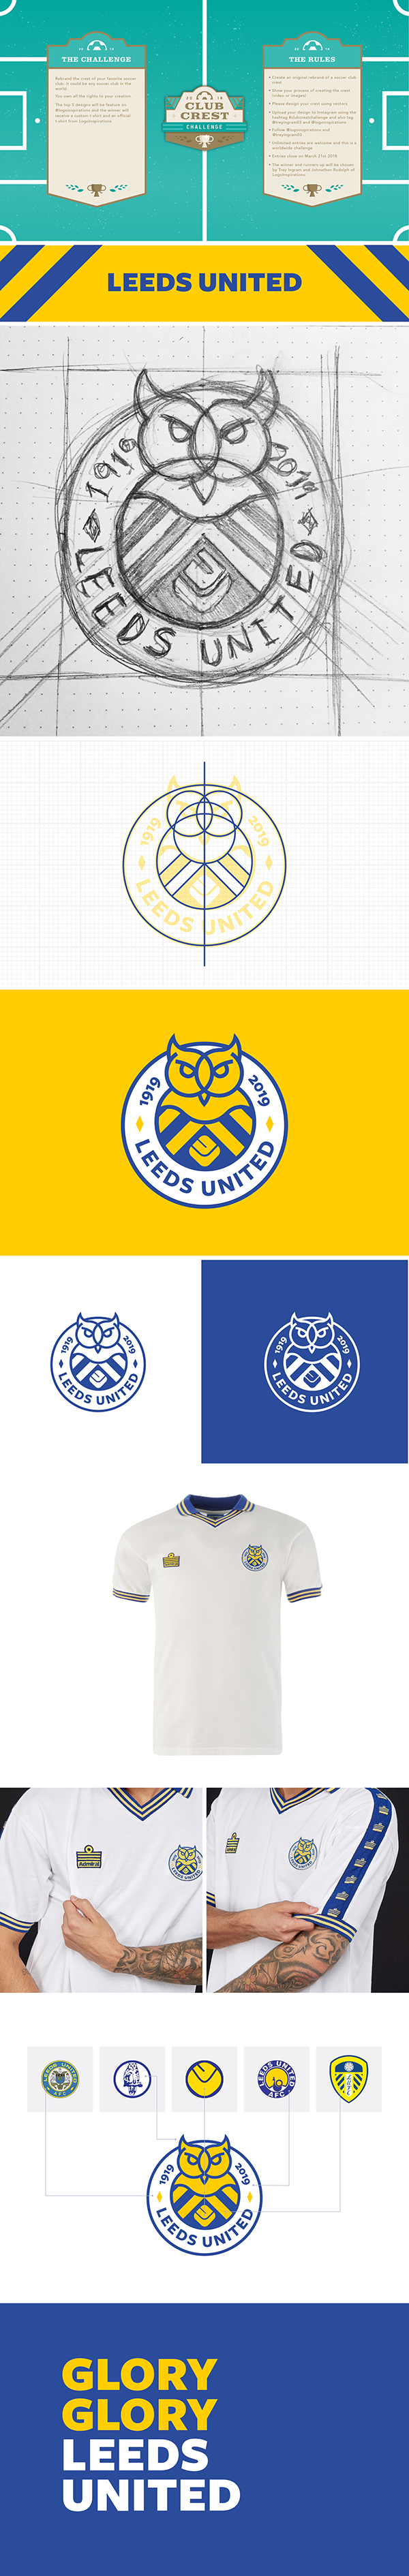 Leeds United F.C | Club Crest Challenge